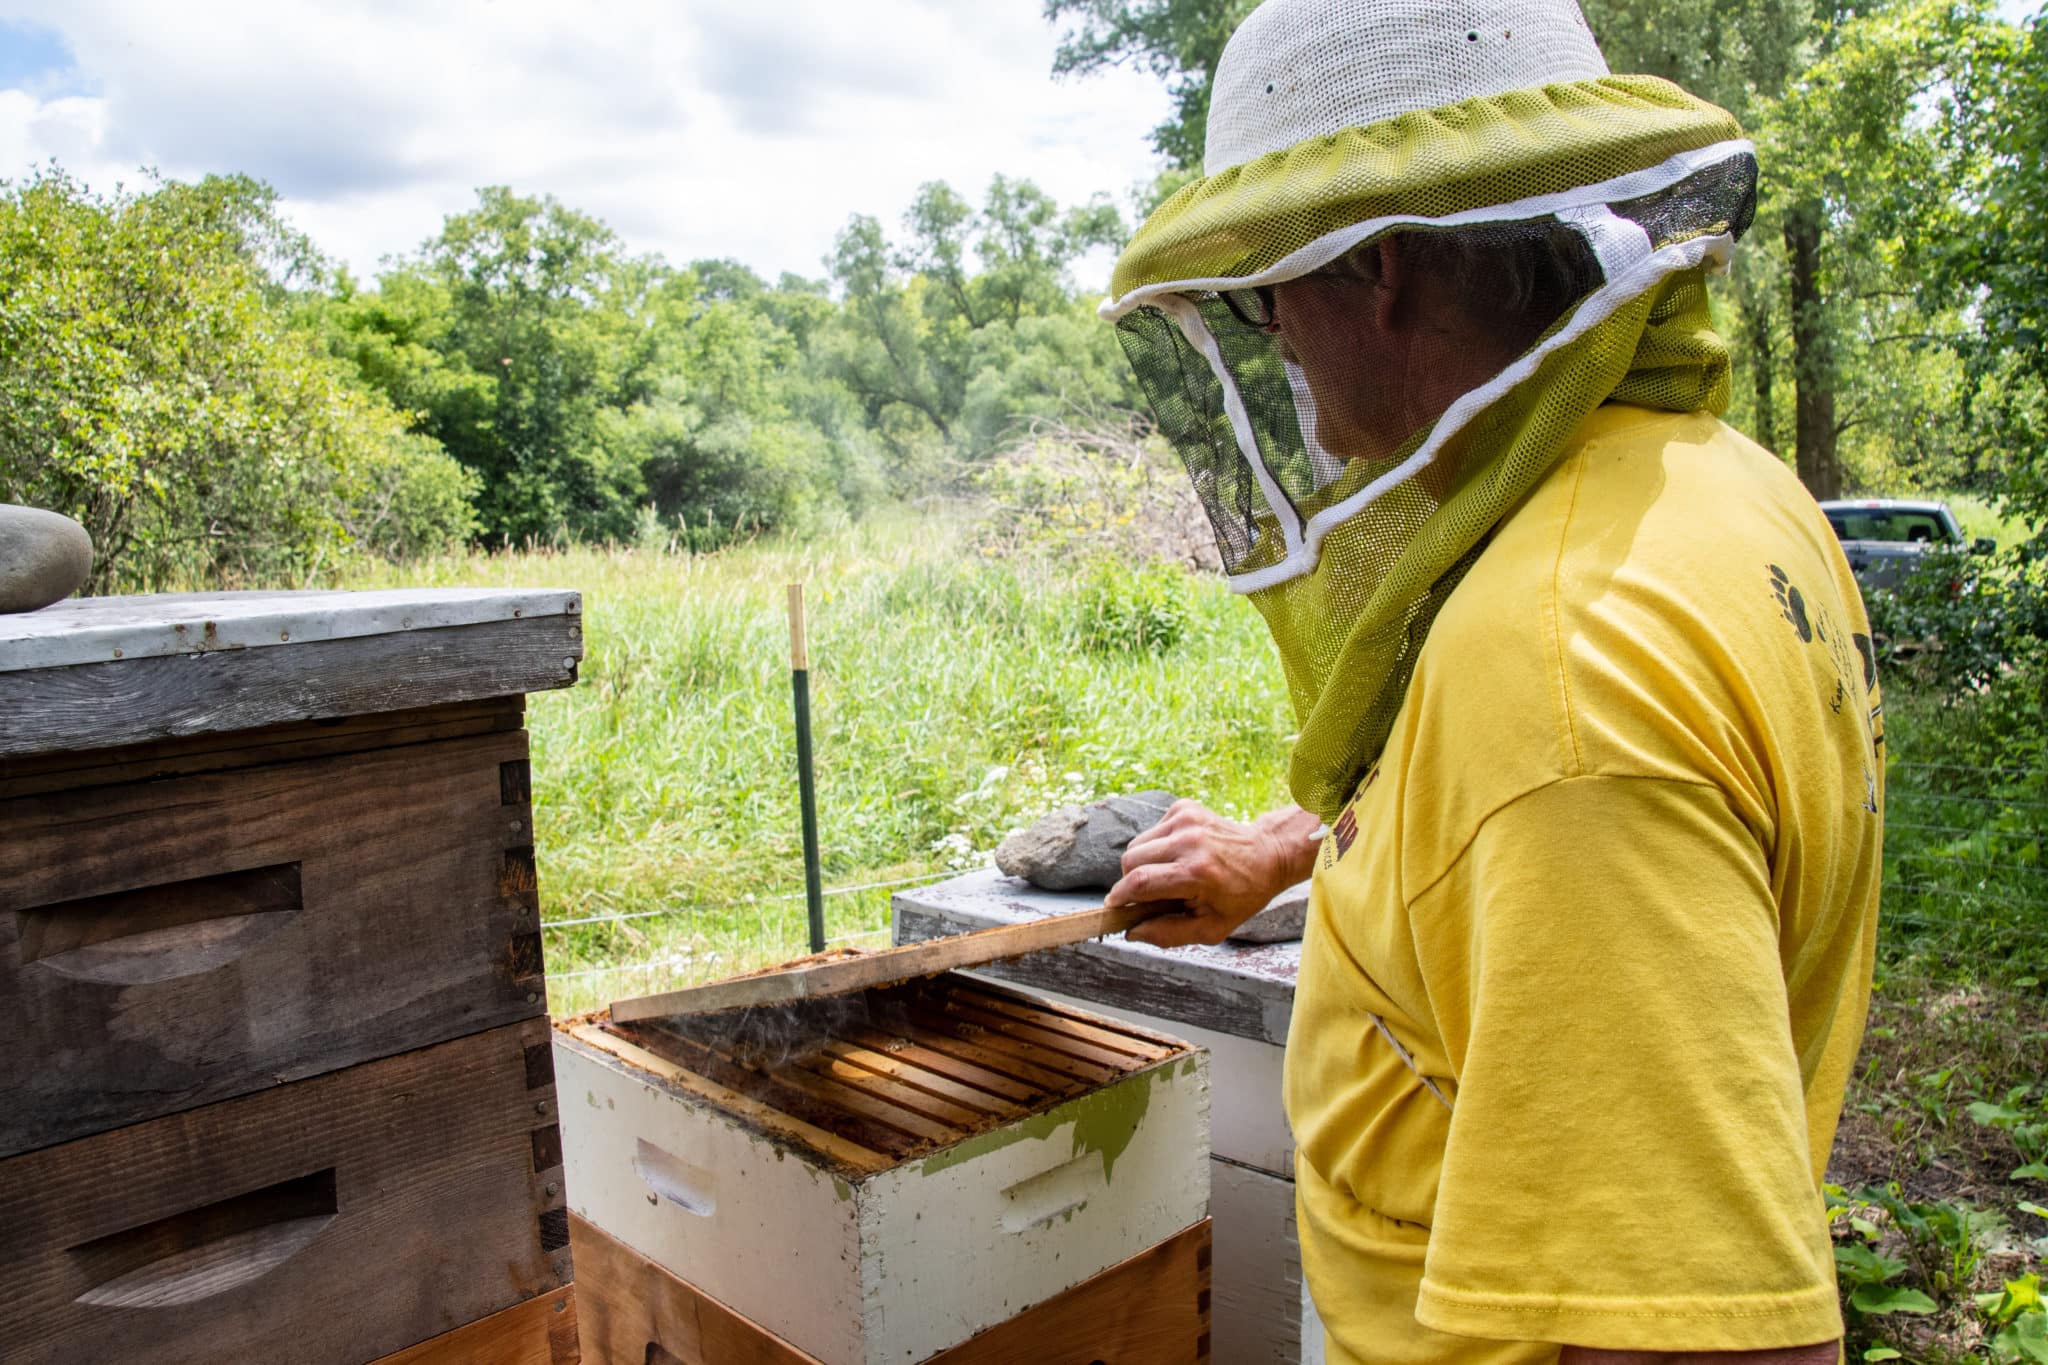 Quentin checks the honeybees